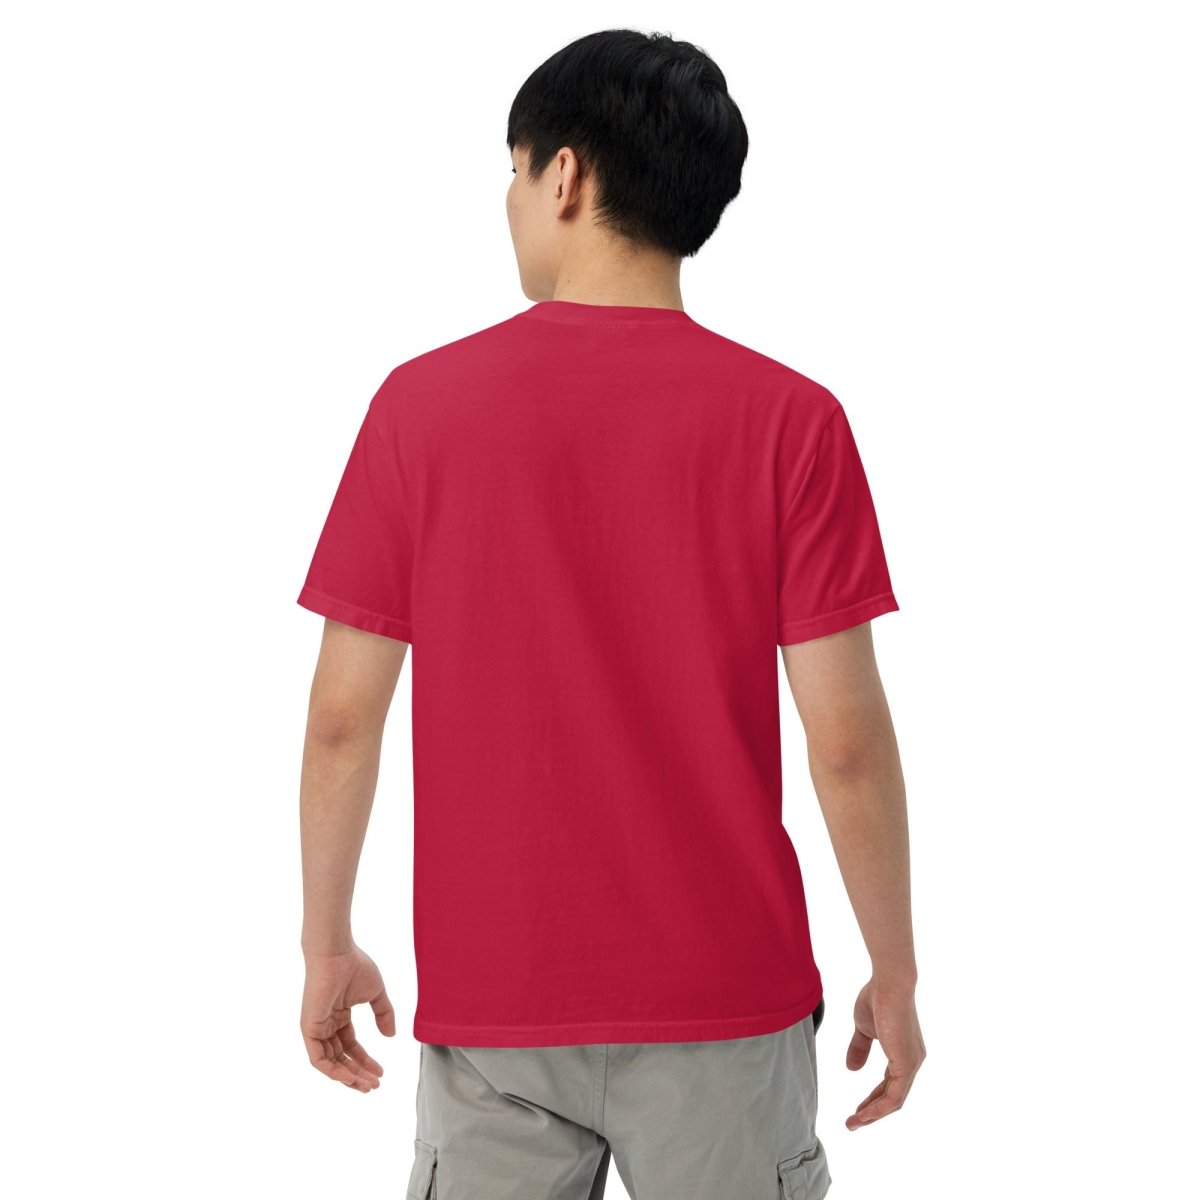 Unisex garment-dyed heavyweight t-shirt - Wifler Industries--Wifler Industries-3408529_15119--Red-S--Unisex garment-dyed